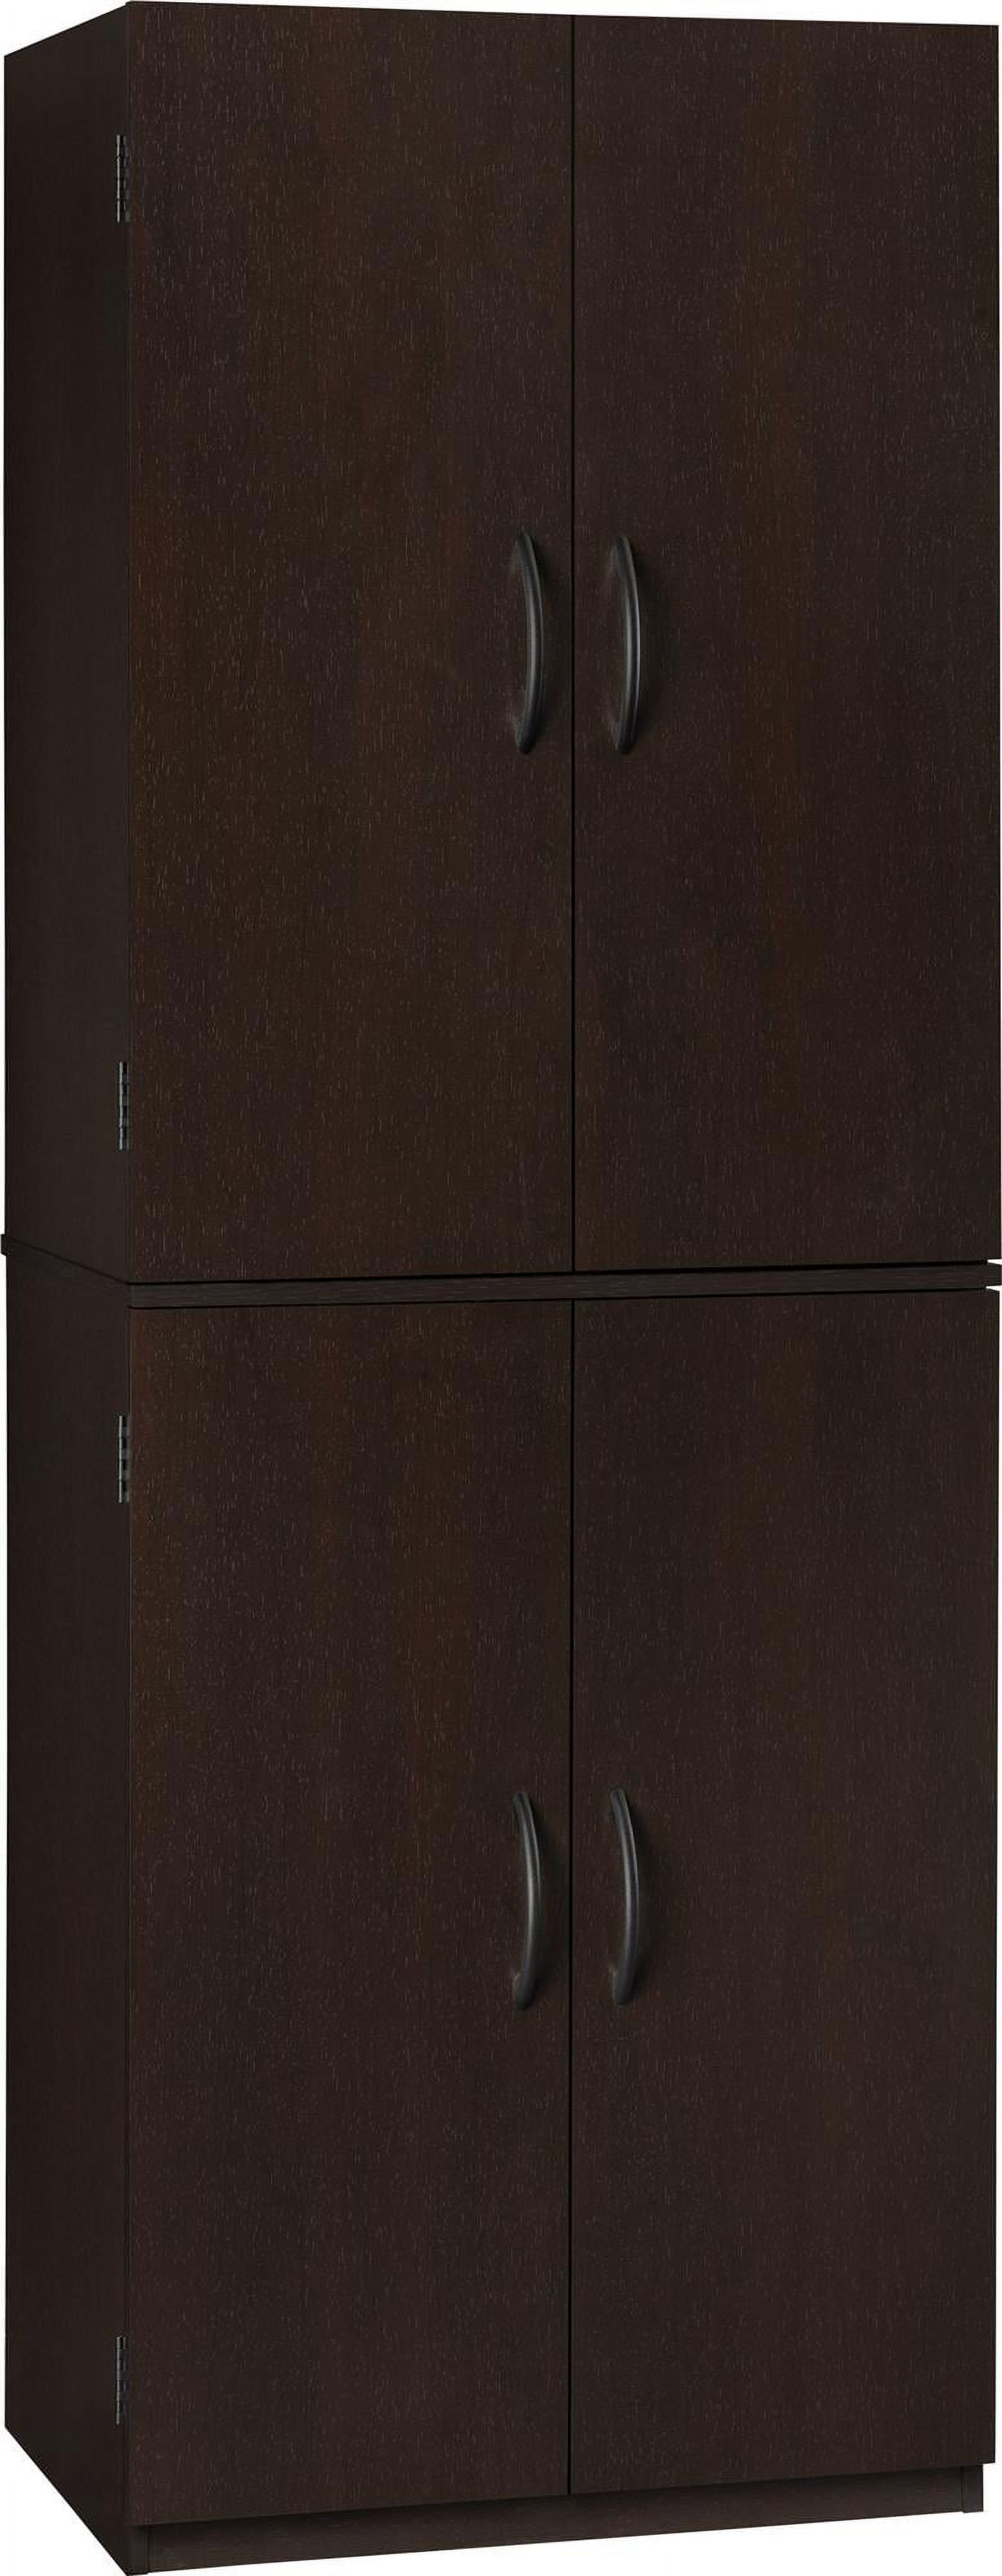 Mainstays 4-Door 5' Storage Cabinet, Dark Chocolate - image 3 of 9